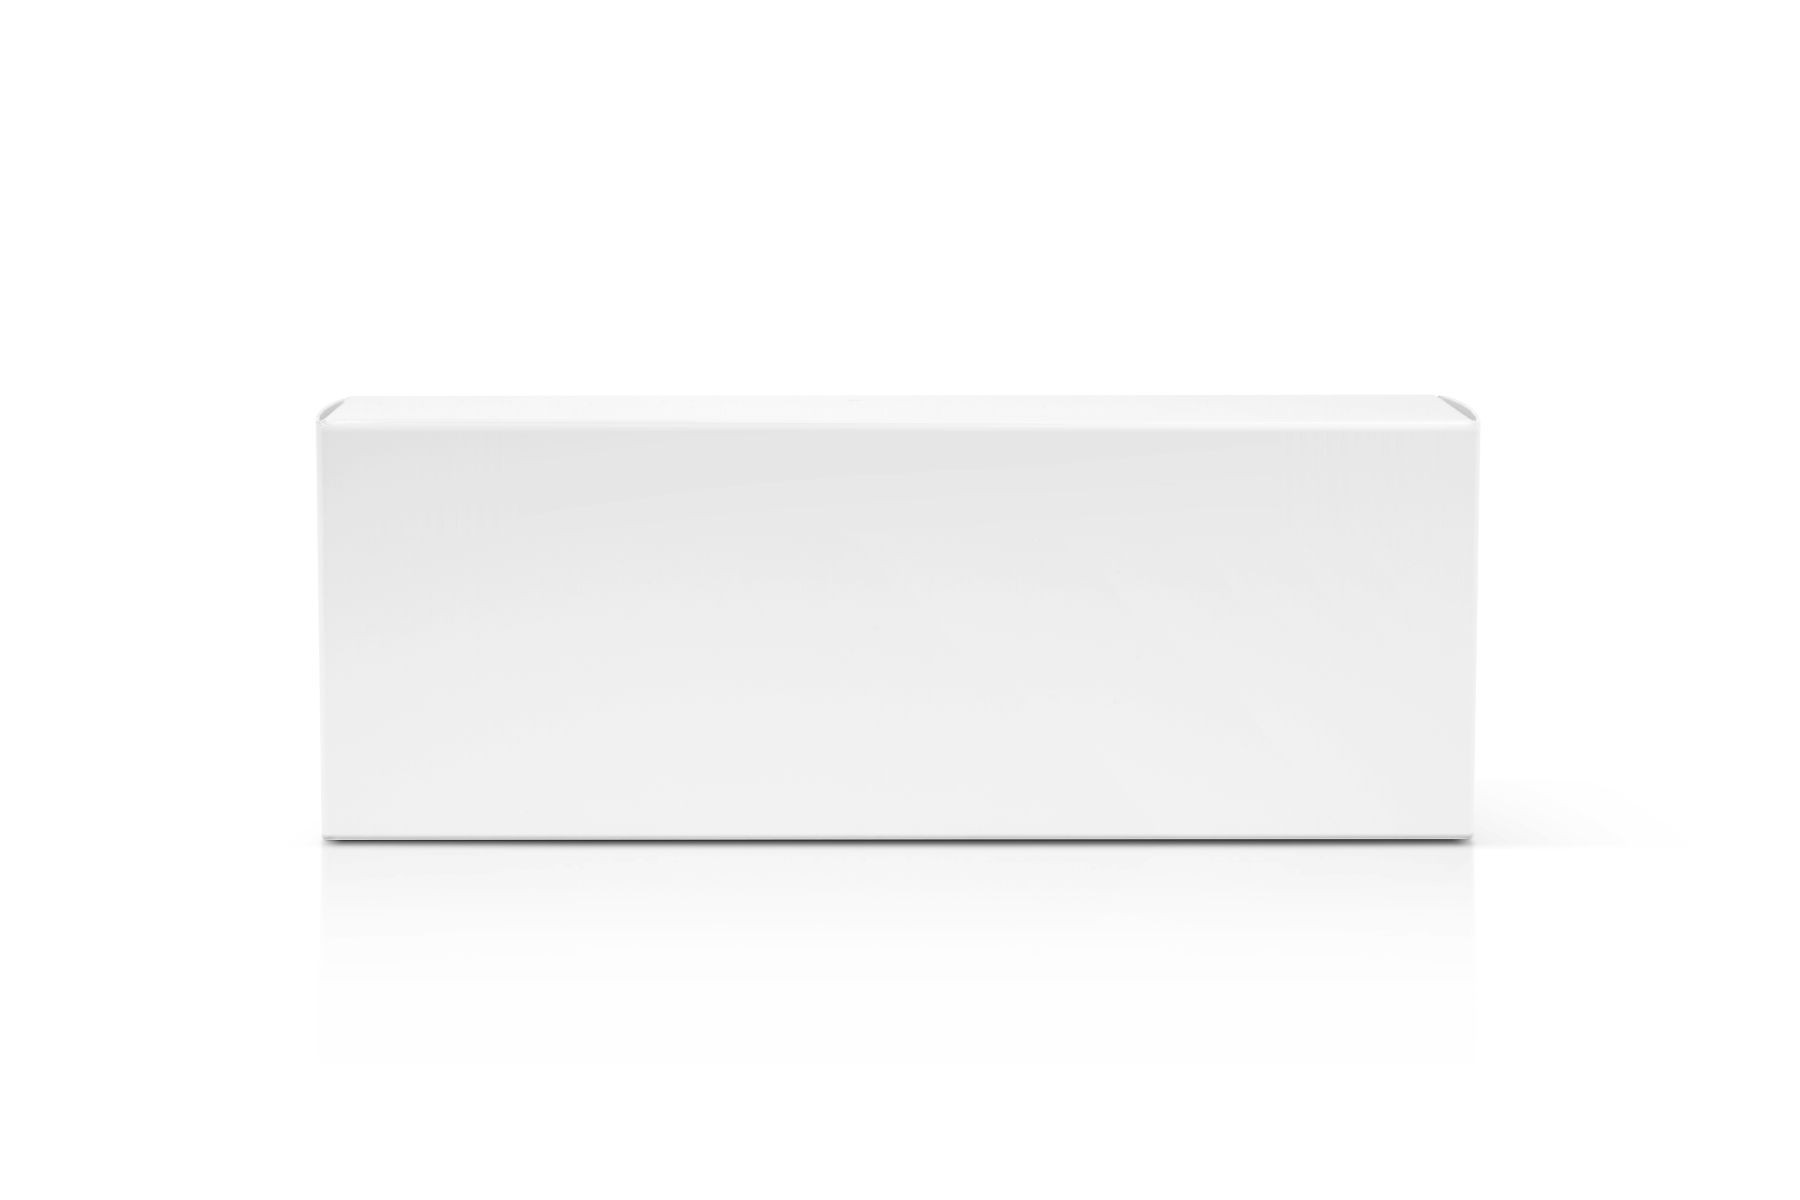 An image of a white rectangular box.